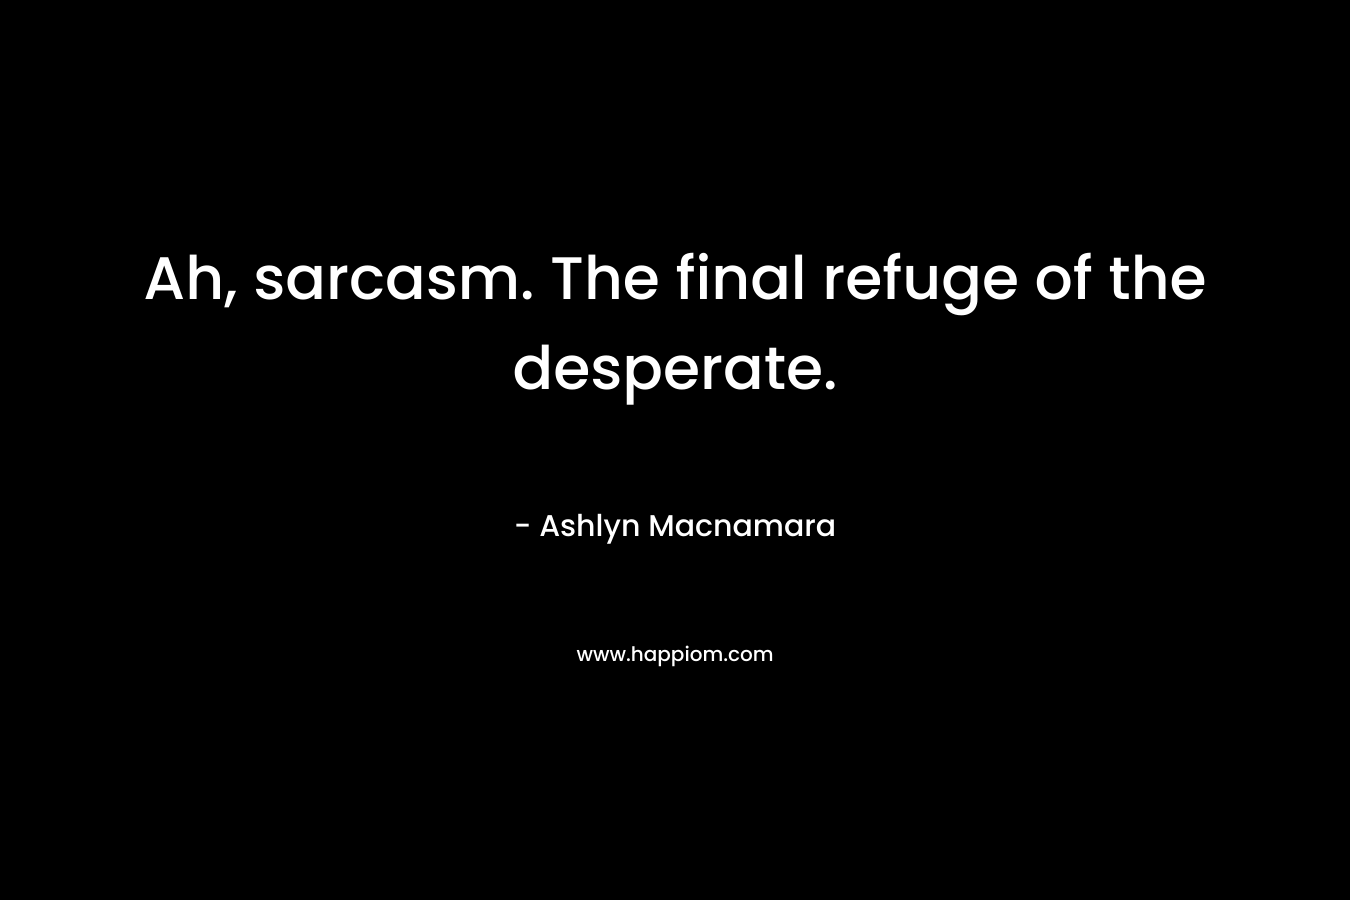 Ah, sarcasm. The final refuge of the desperate. – Ashlyn Macnamara